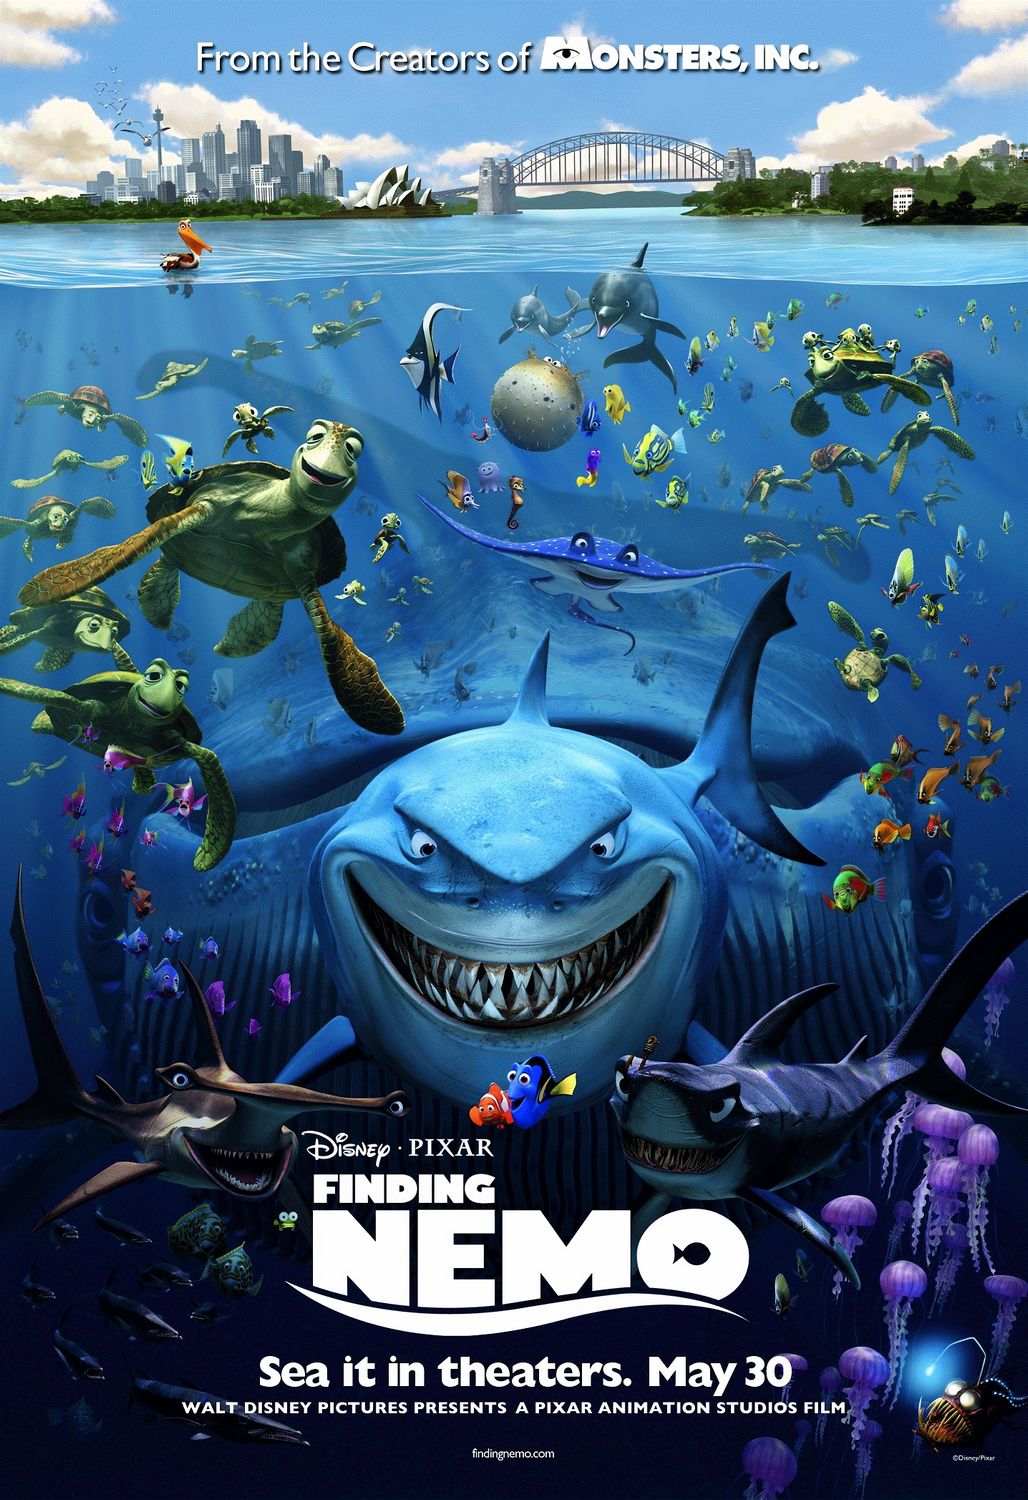 walt disney pictures presents a pixar animation studios film finding nemo